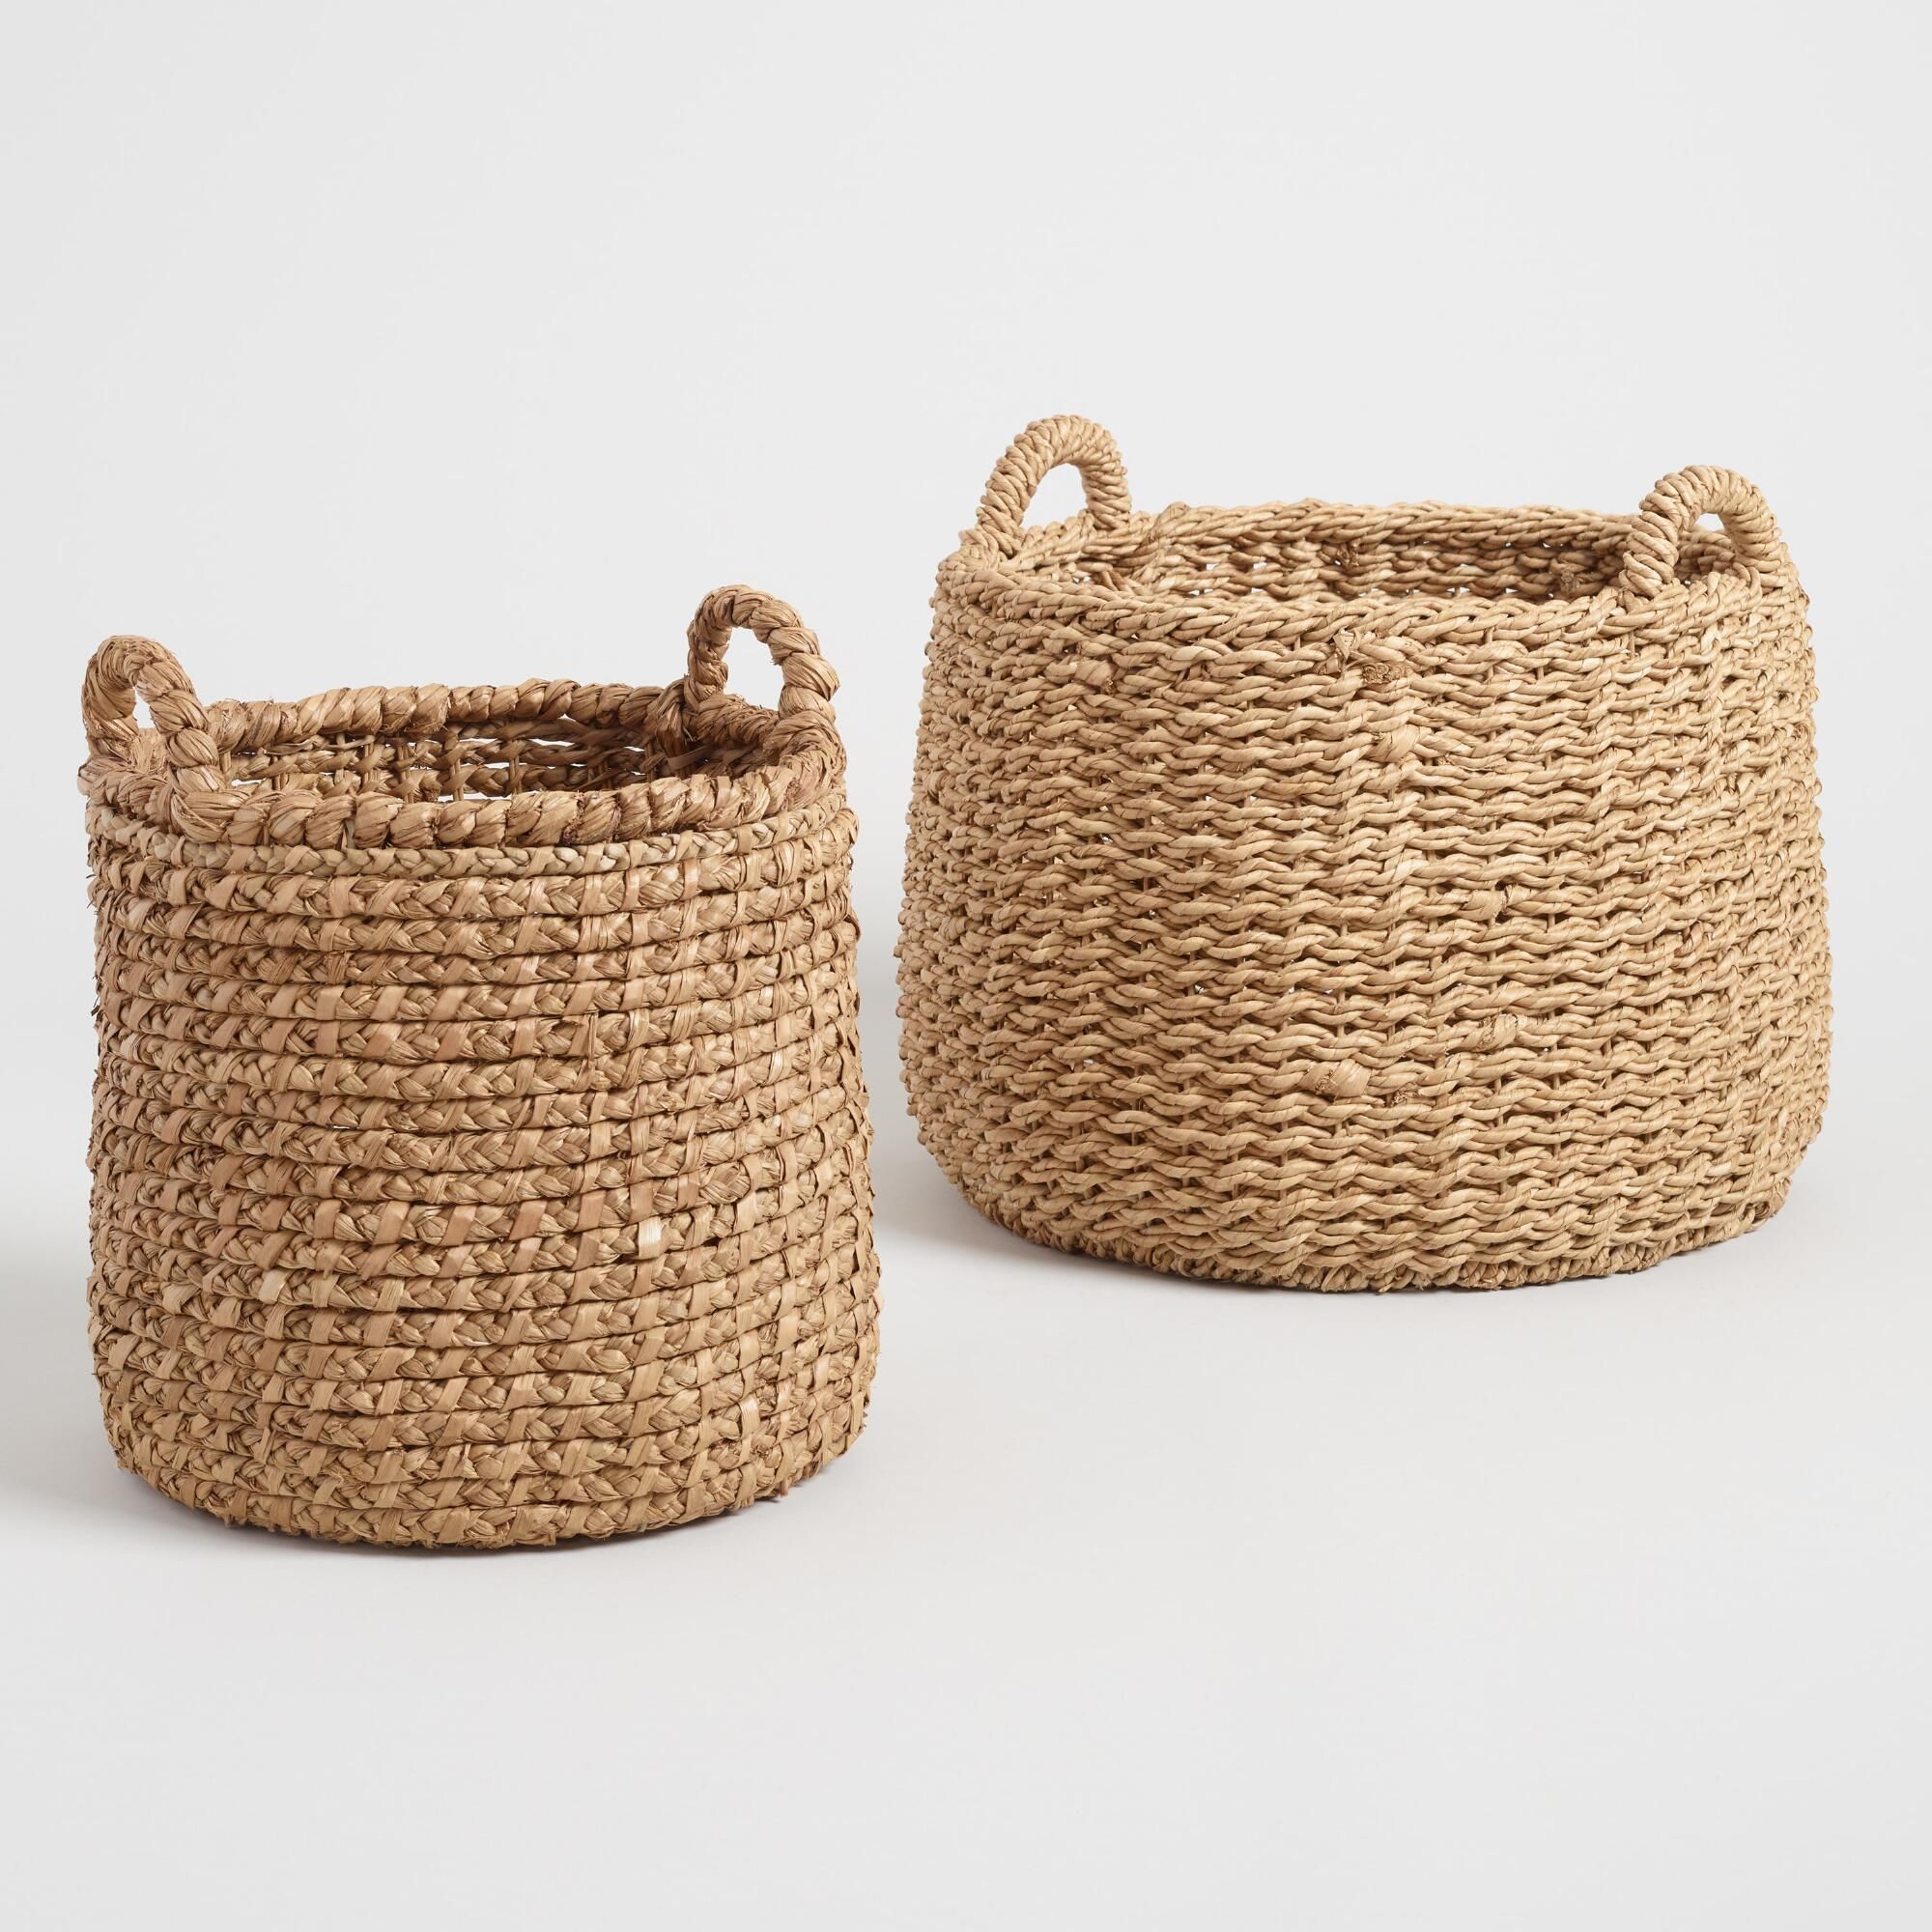 Natural Hyacinth Noelle Tote Baskets - Medium by World Market Medium | World Market